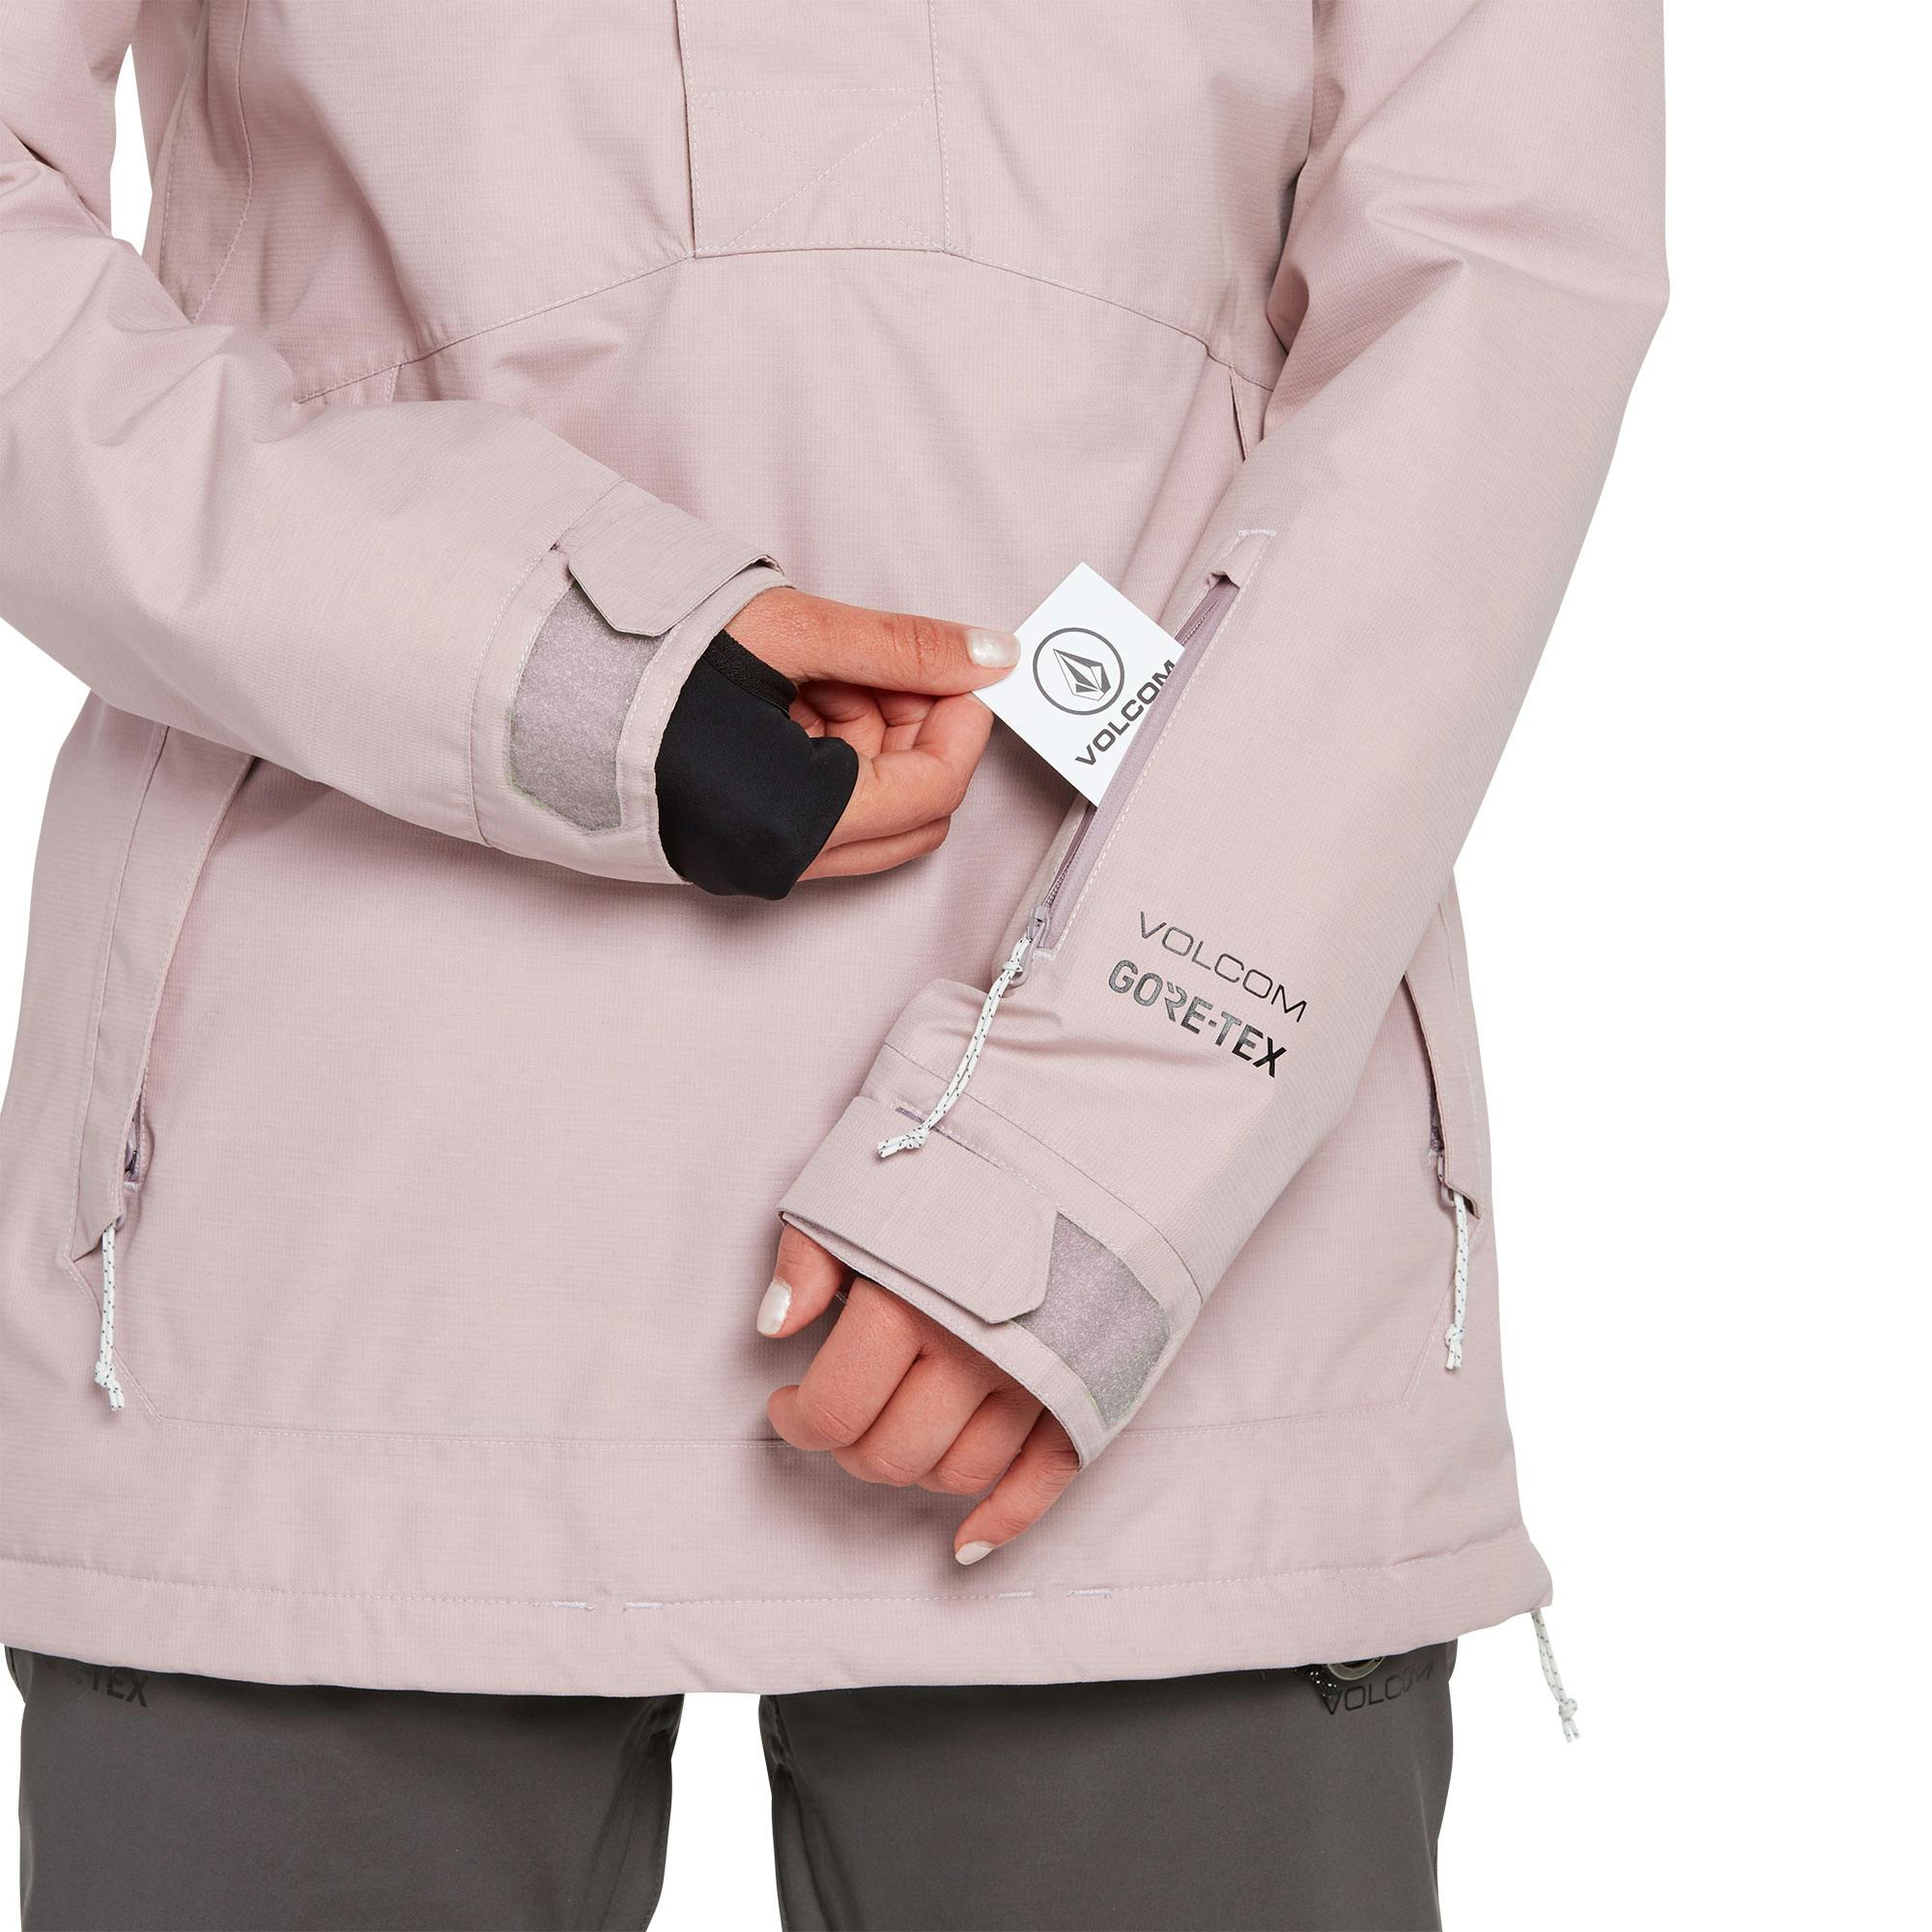 Volcom Women's Fern Insulated GORE-TEX® Pullover Jacket